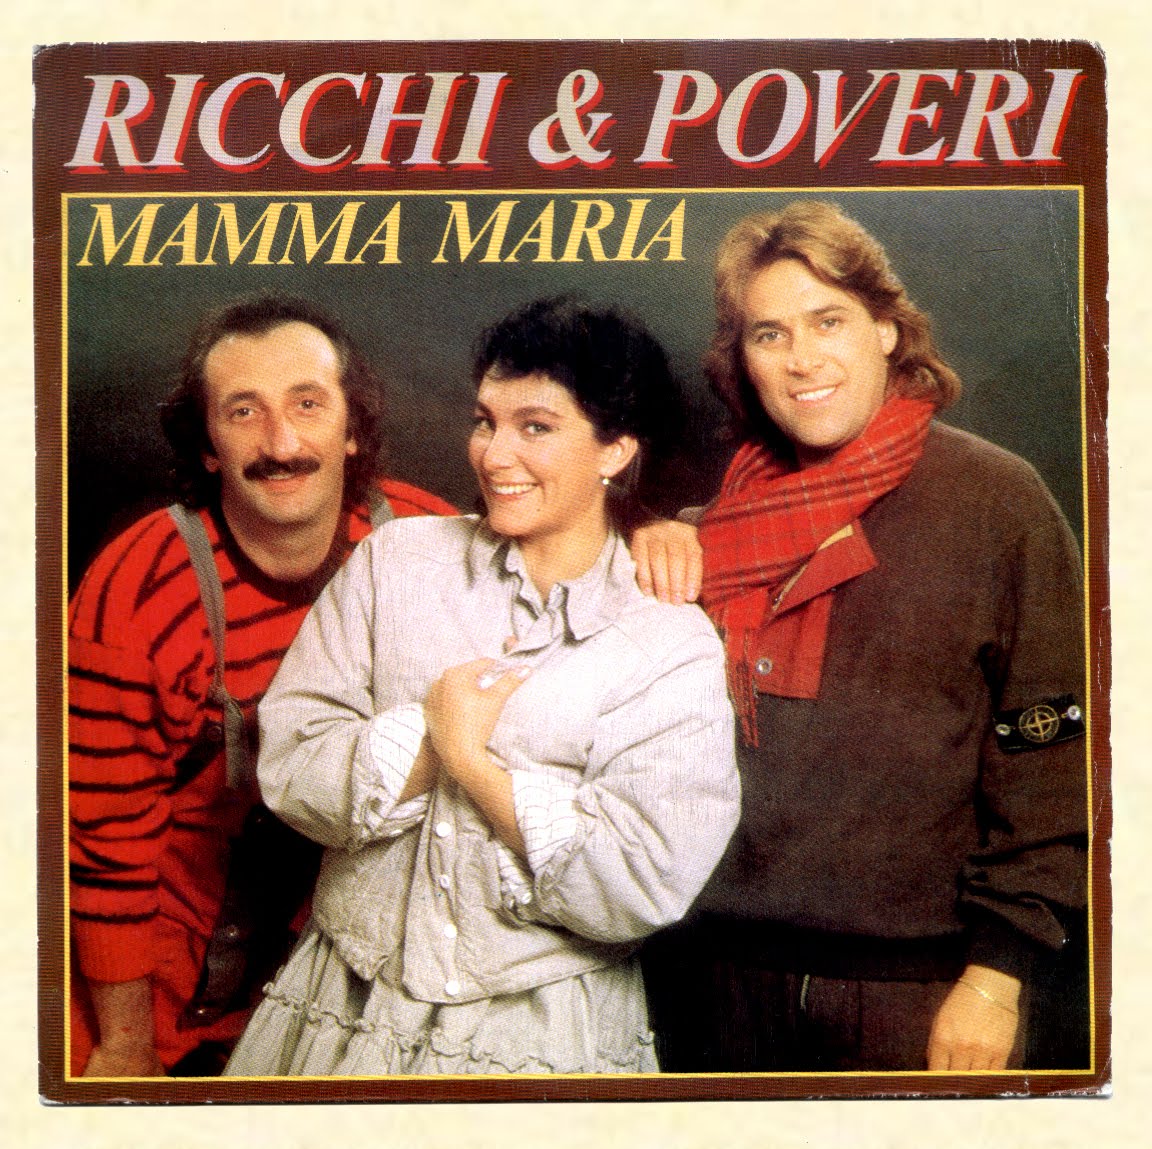 Mamma maria ricchi. 1982 — Mamma Maria. Рики е повери. Рики и повери 1981.